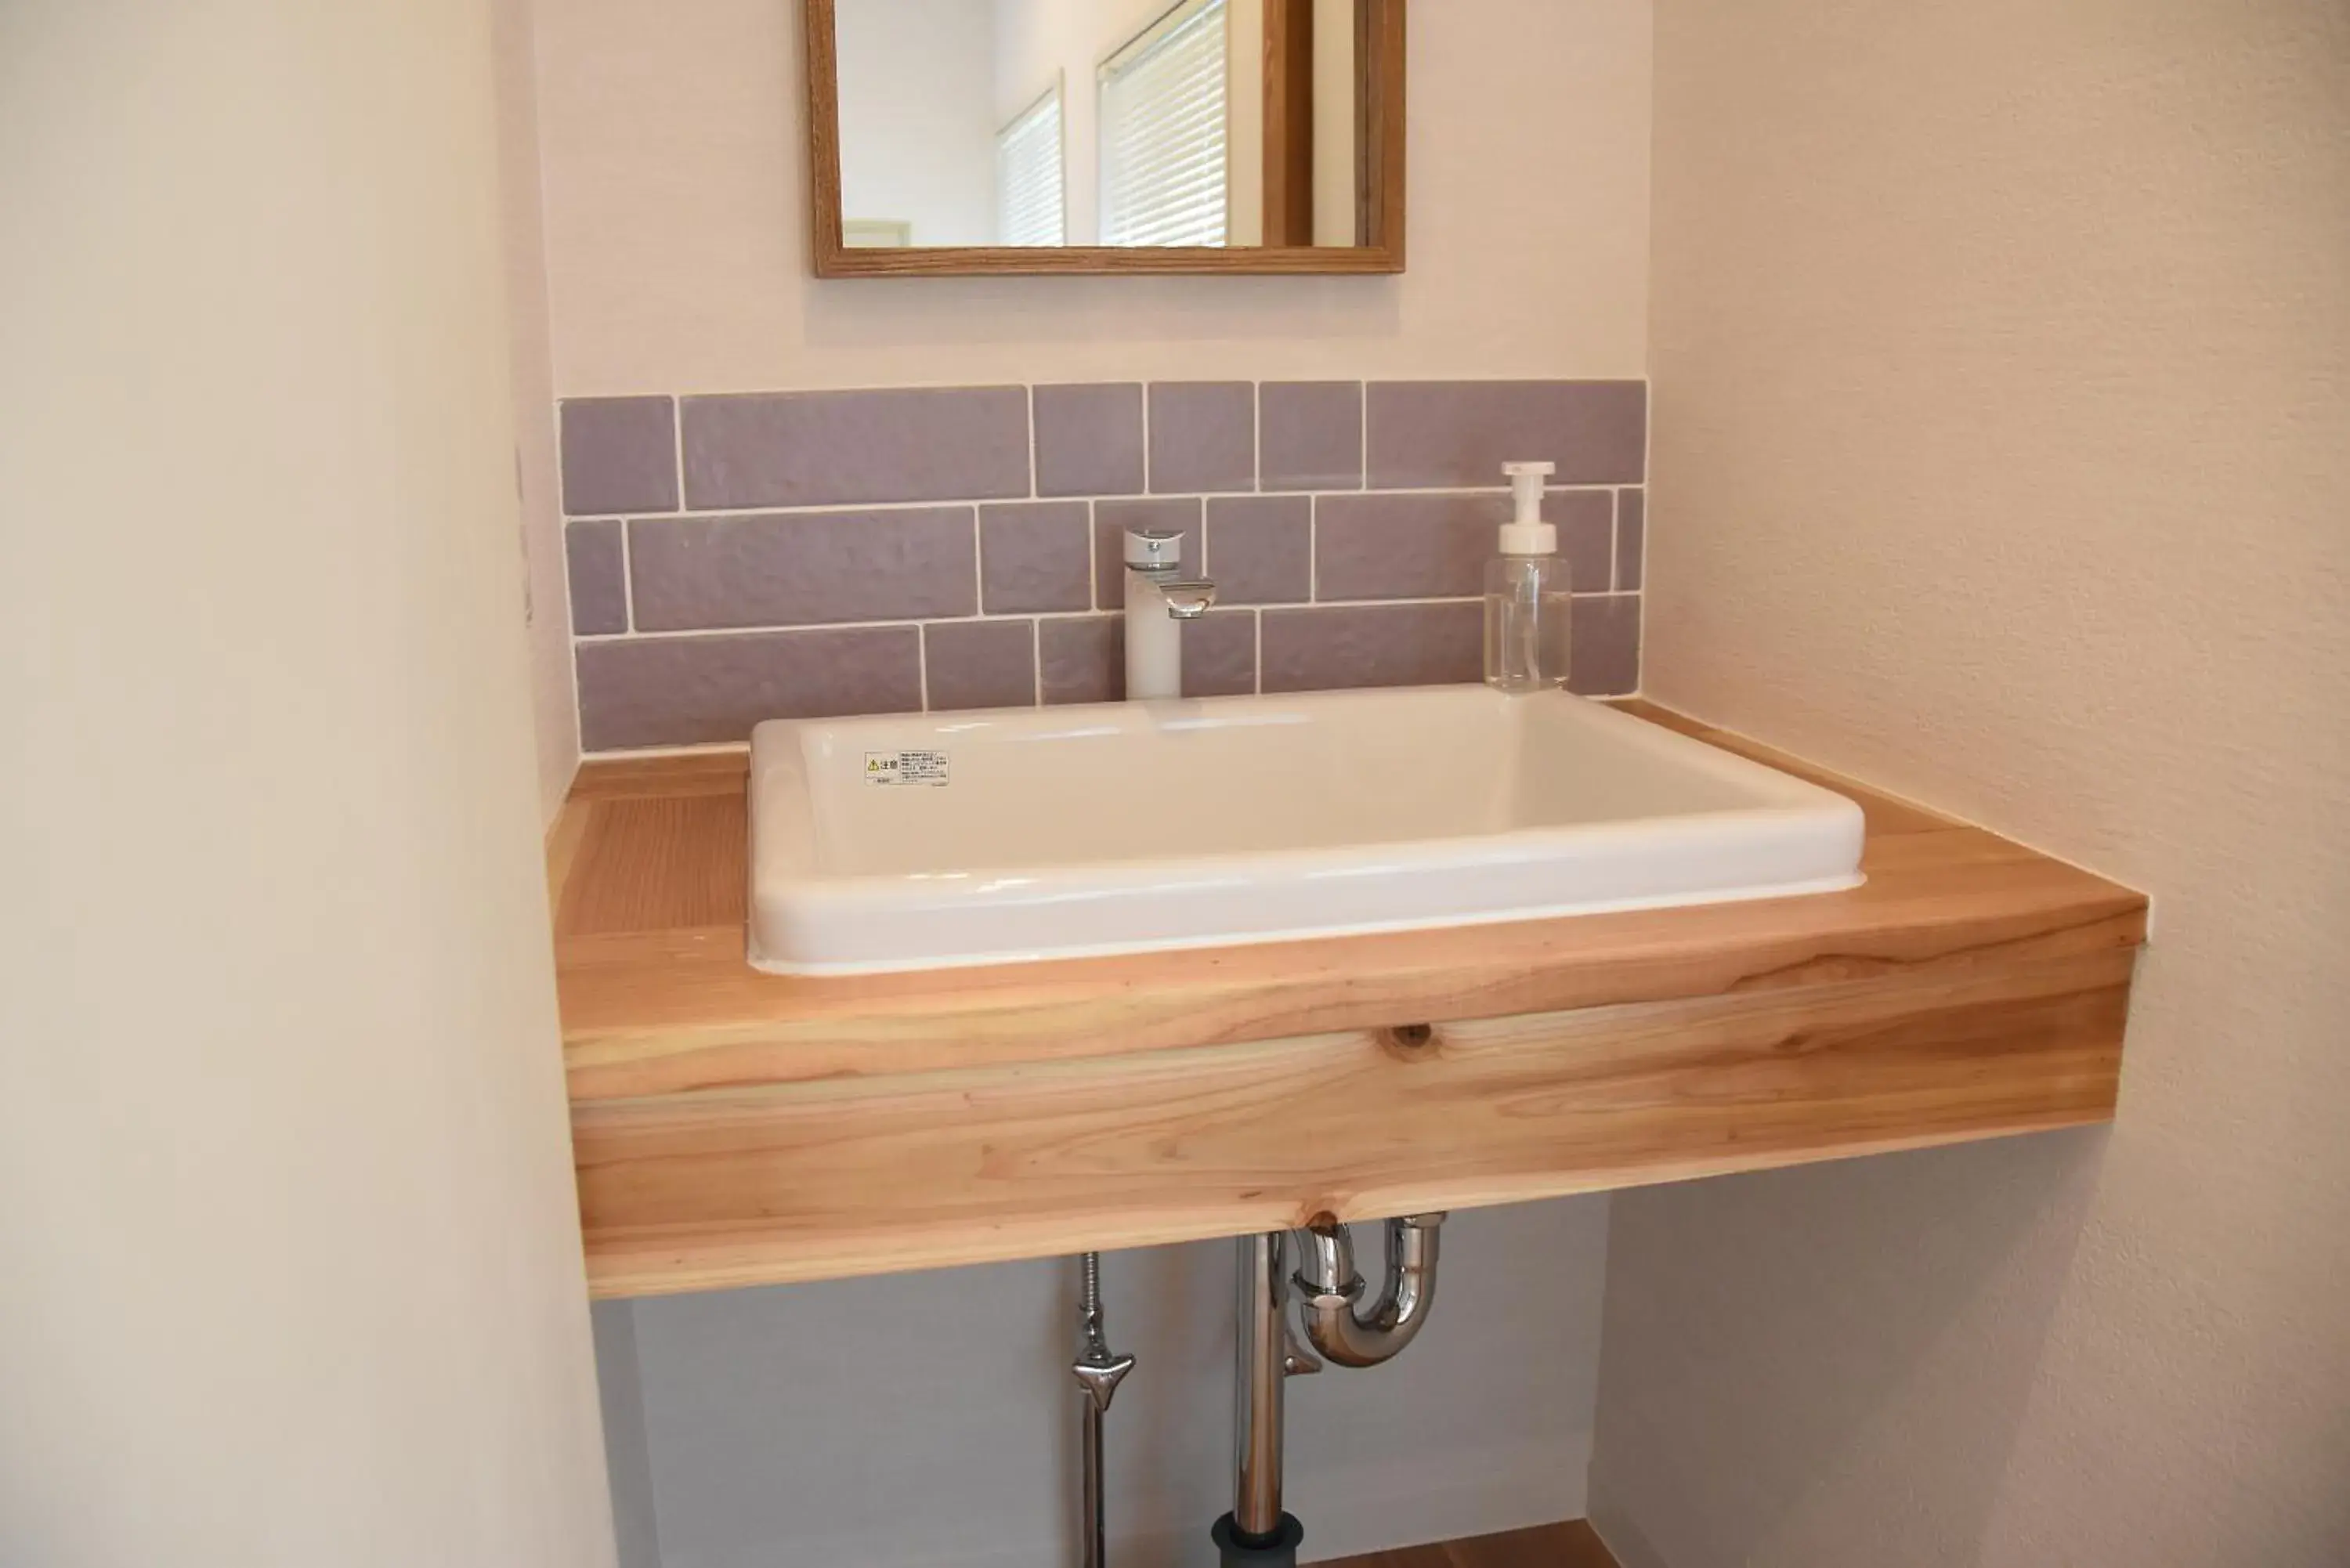 Area and facilities, Bathroom in Expected Inn